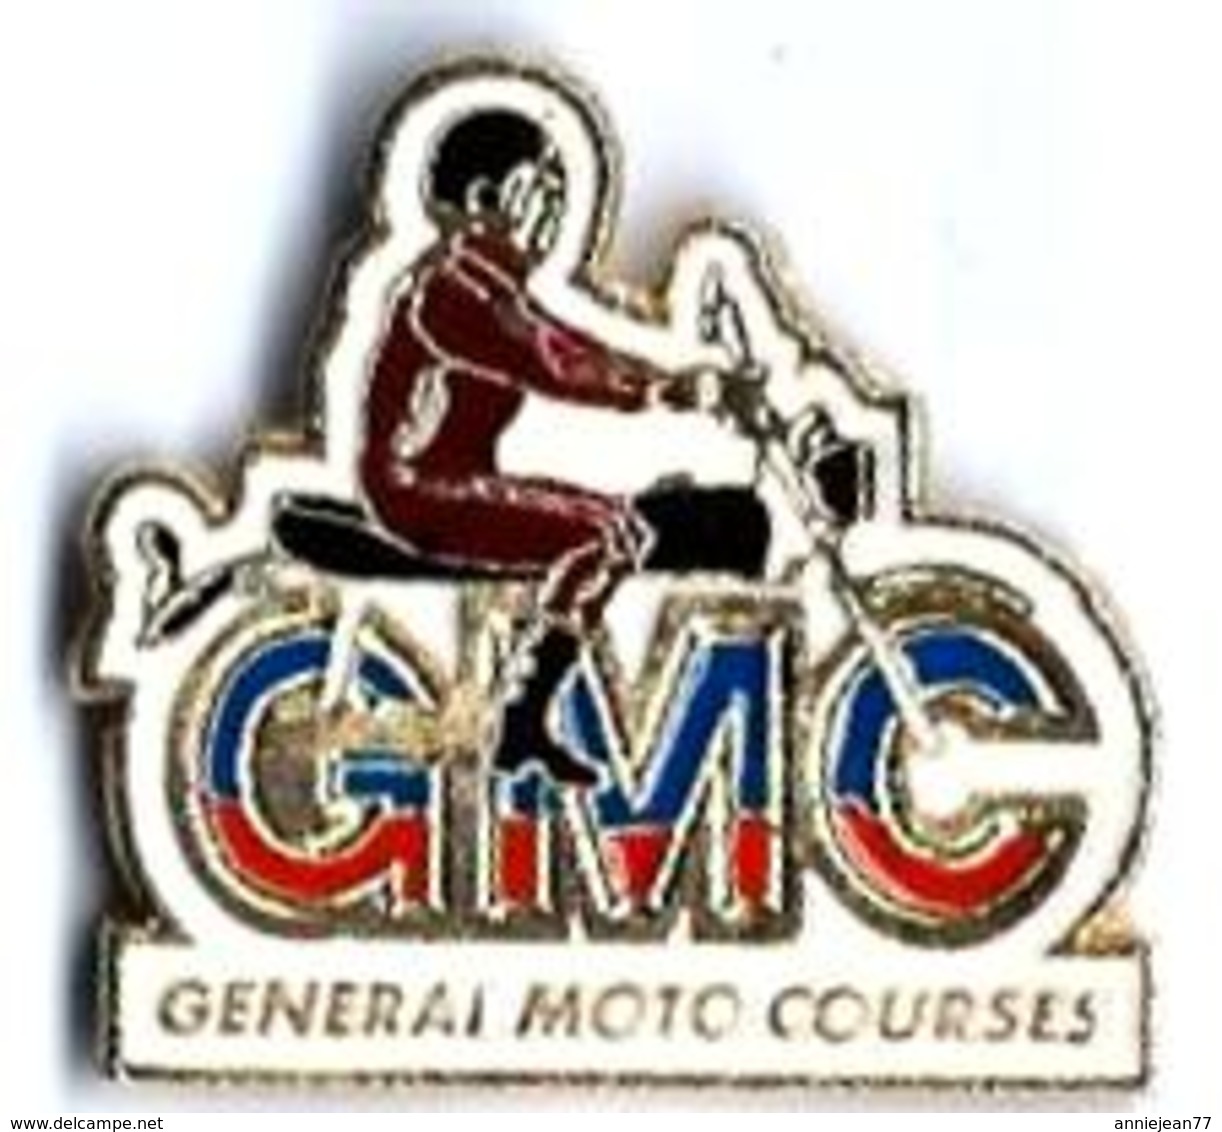 MOTOS - M2 - GMC - GENERAL MOTO COURSES - Verso : SUPPE - Motorfietsen